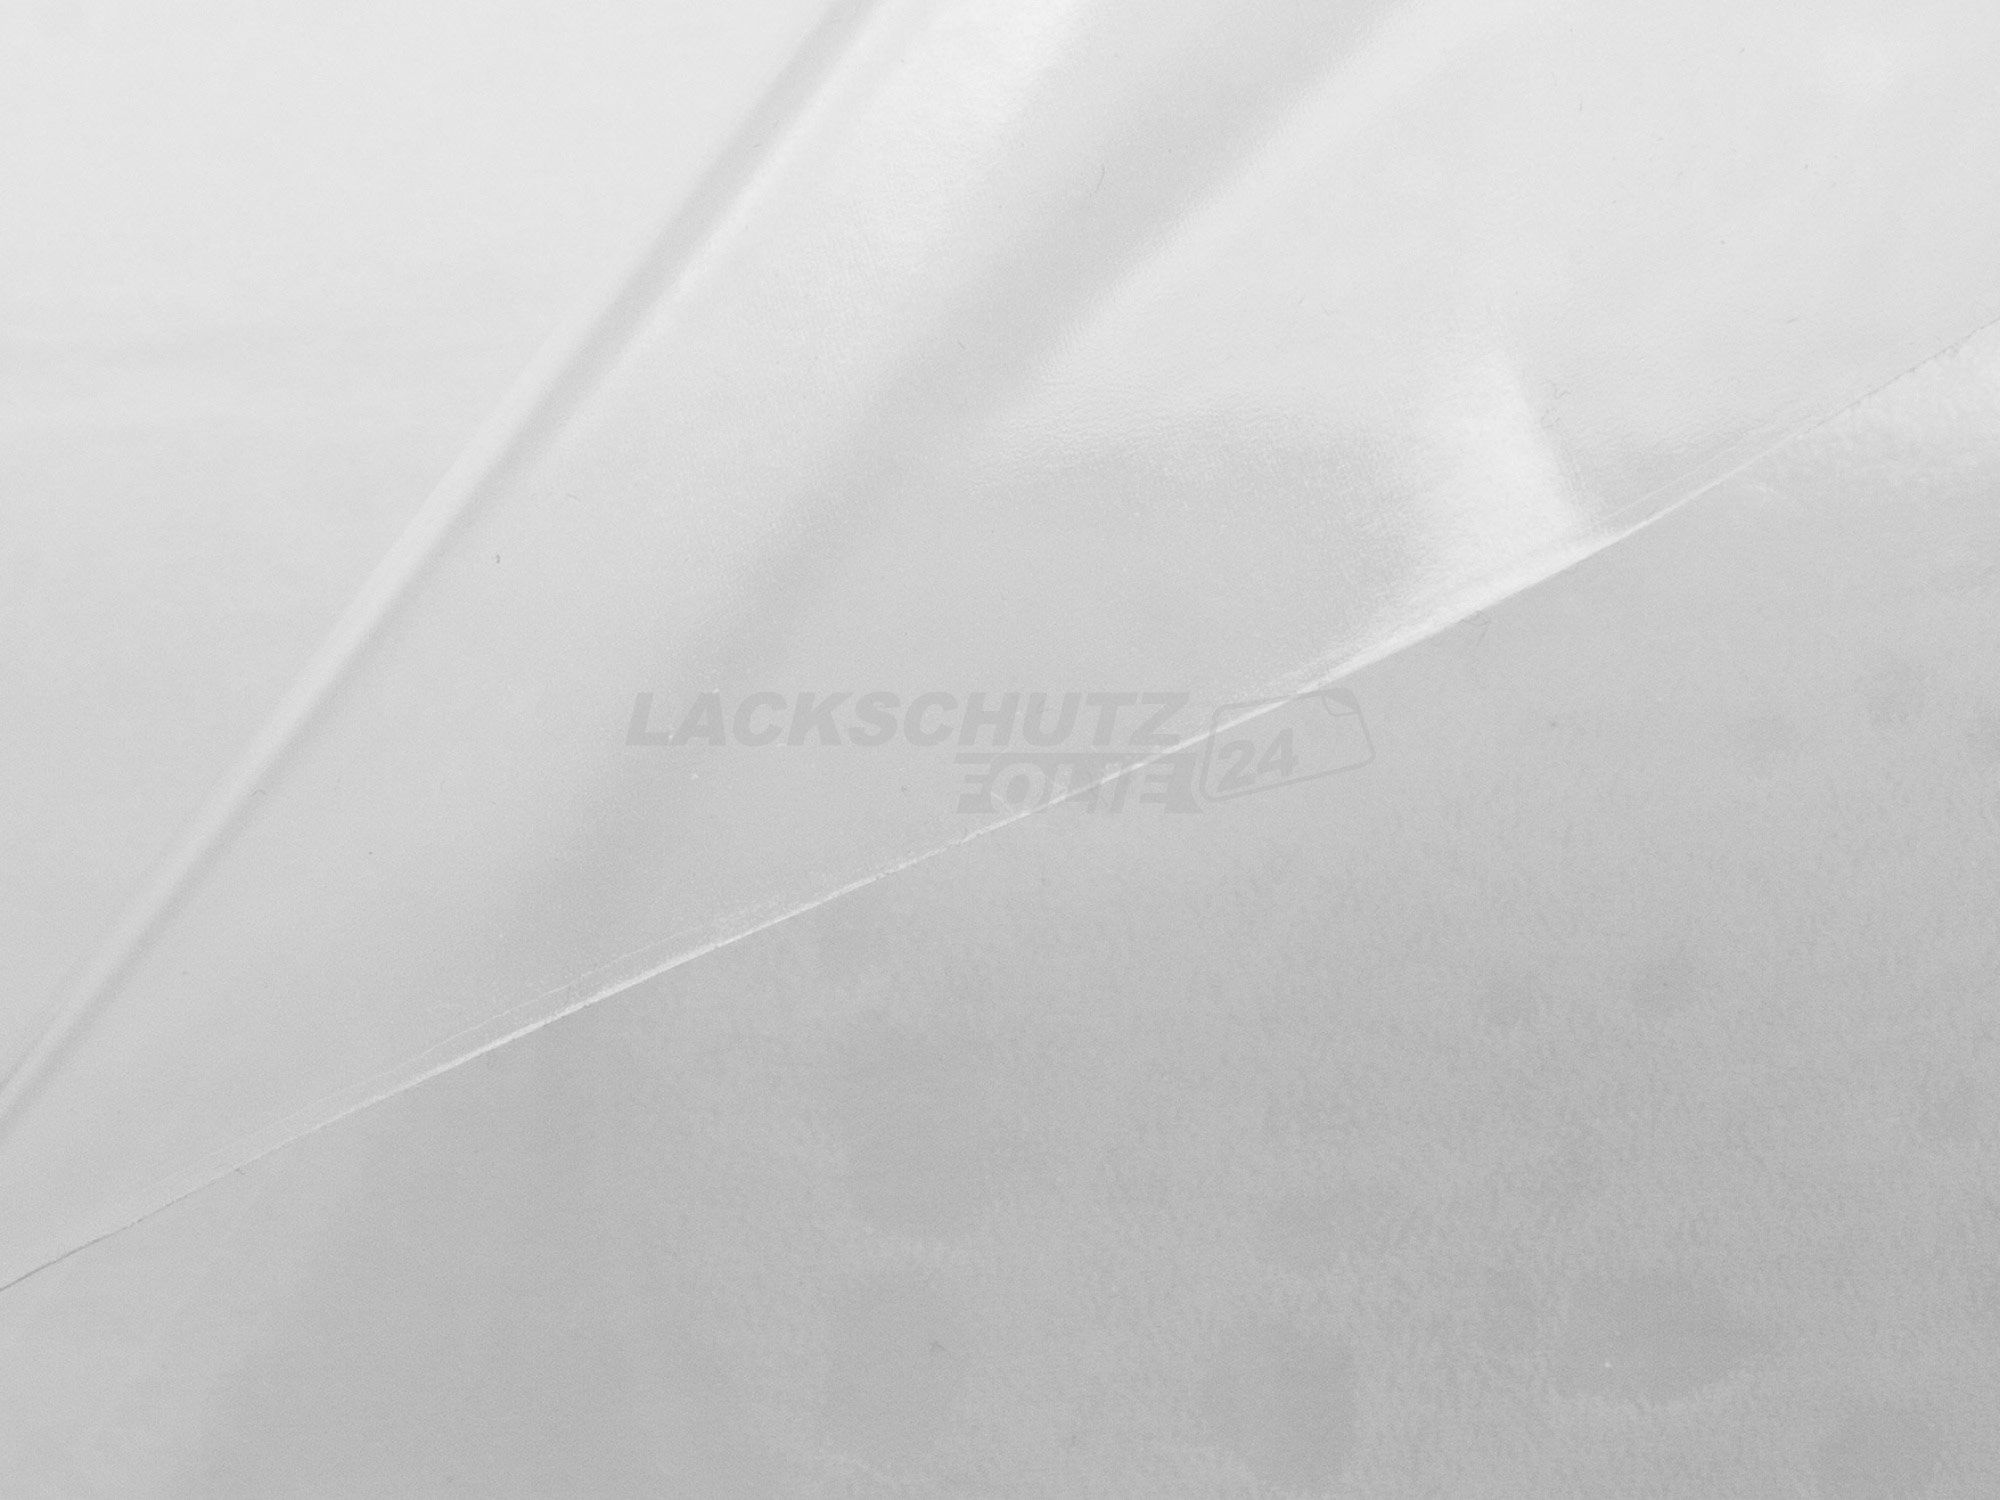 Ladekantenschutzfolie - Transparent Glatt Hochglänzend 150 µm stark für Audi Q5 (I) Typ 8R, BJ 08/2008 - 12/2016